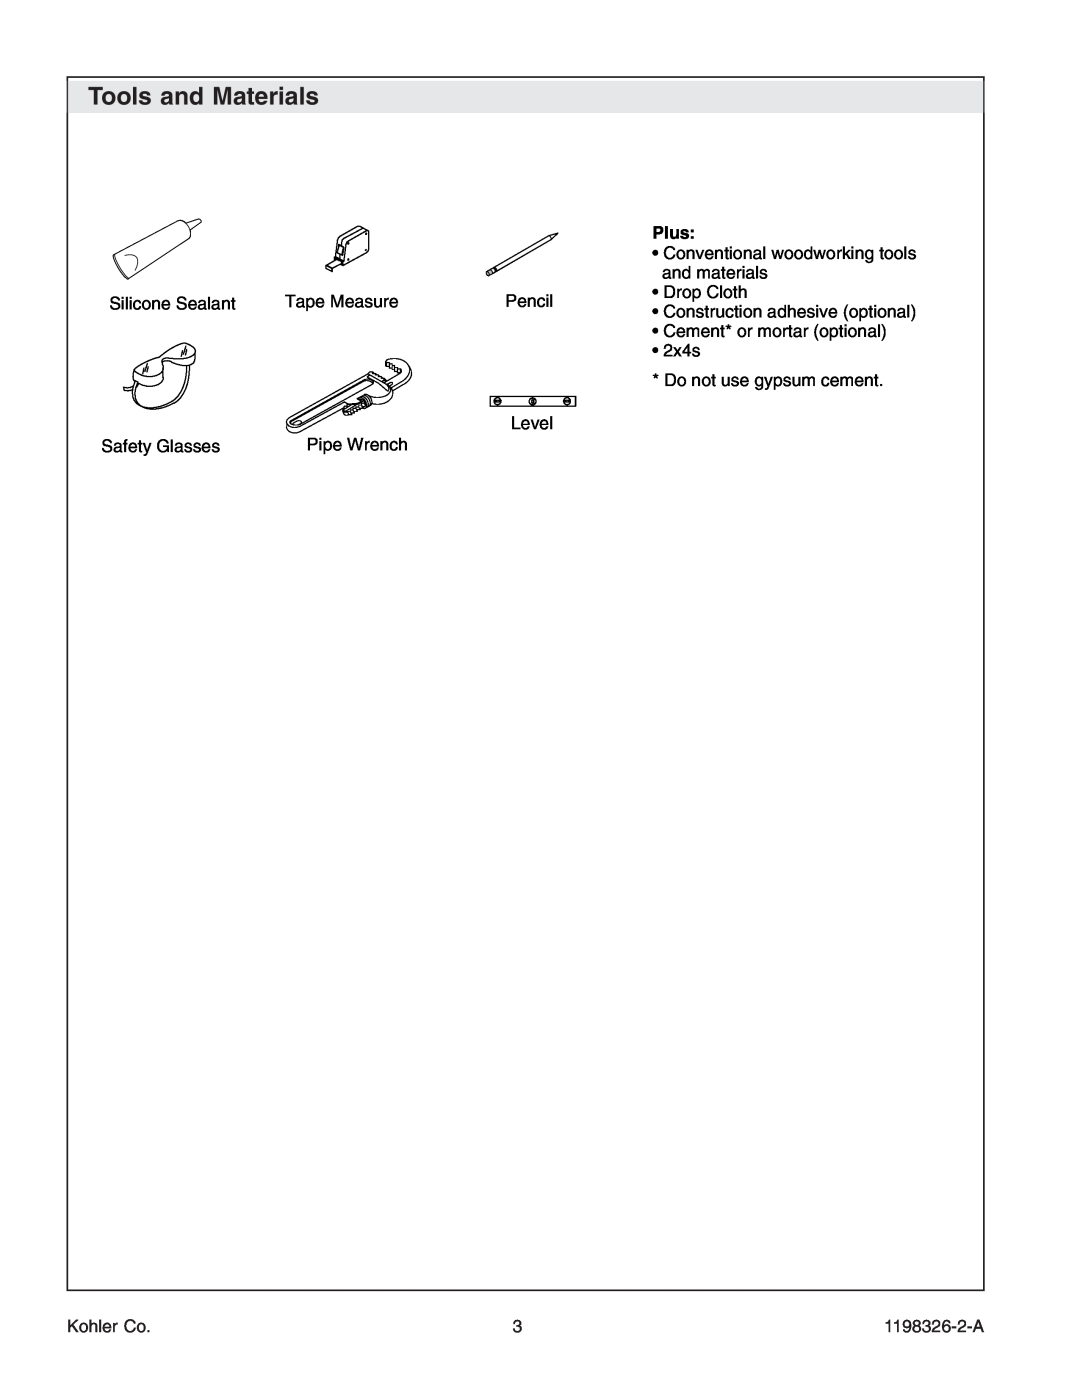 Kohler 1198326-2-A manual Tools and Materials, Level, Plus, Kohler Co 